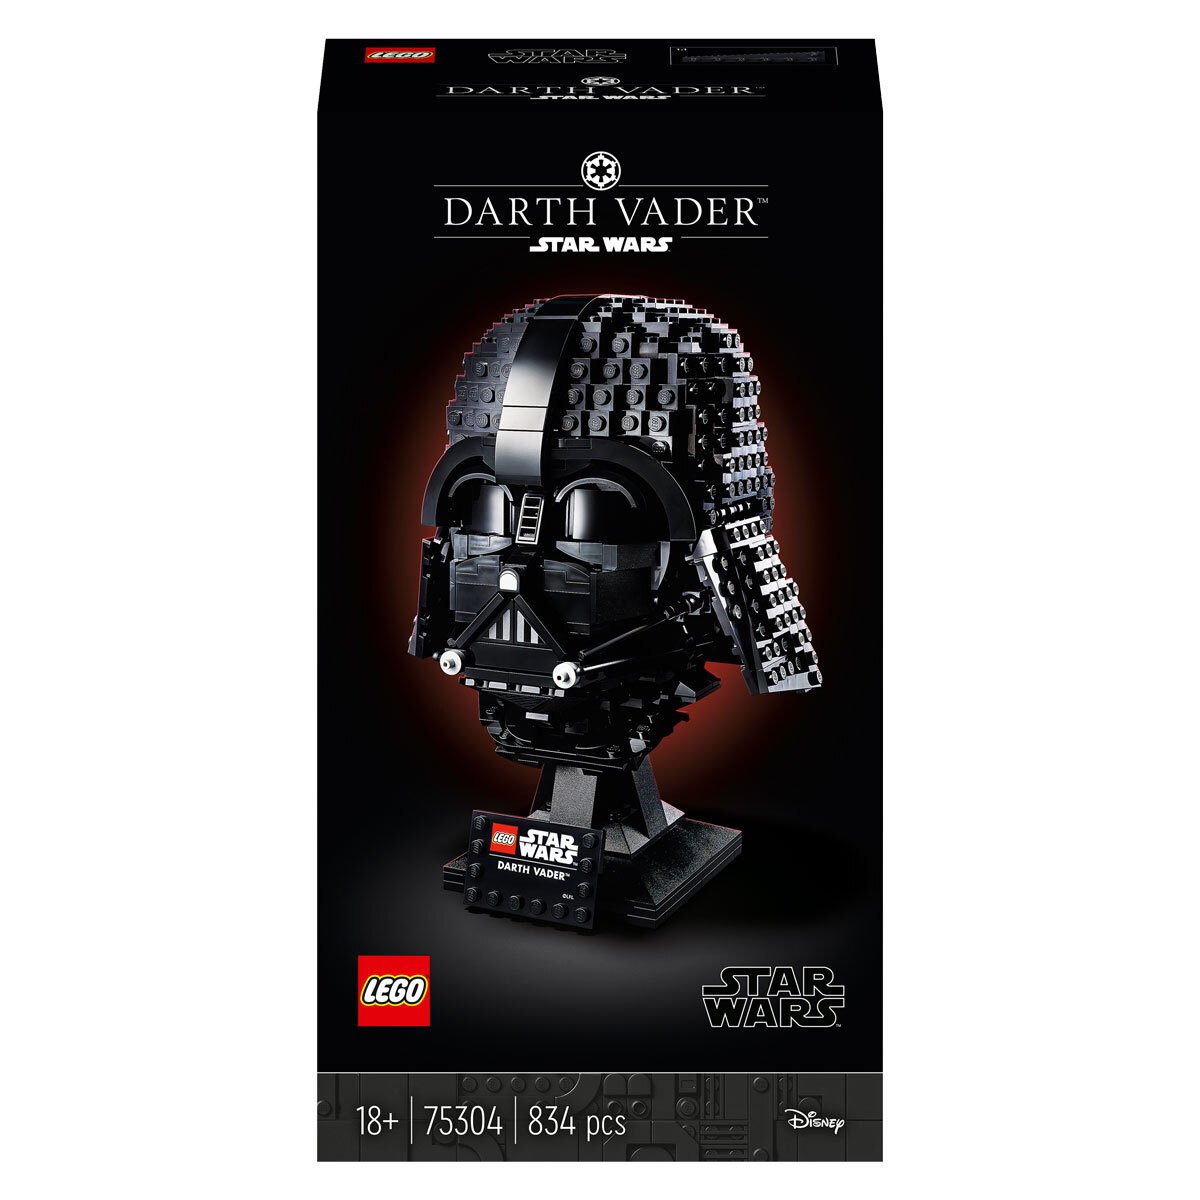 Buy LEGO Darth Vader Helmet Model 75304 Front of Box Image at Costco.co.uk